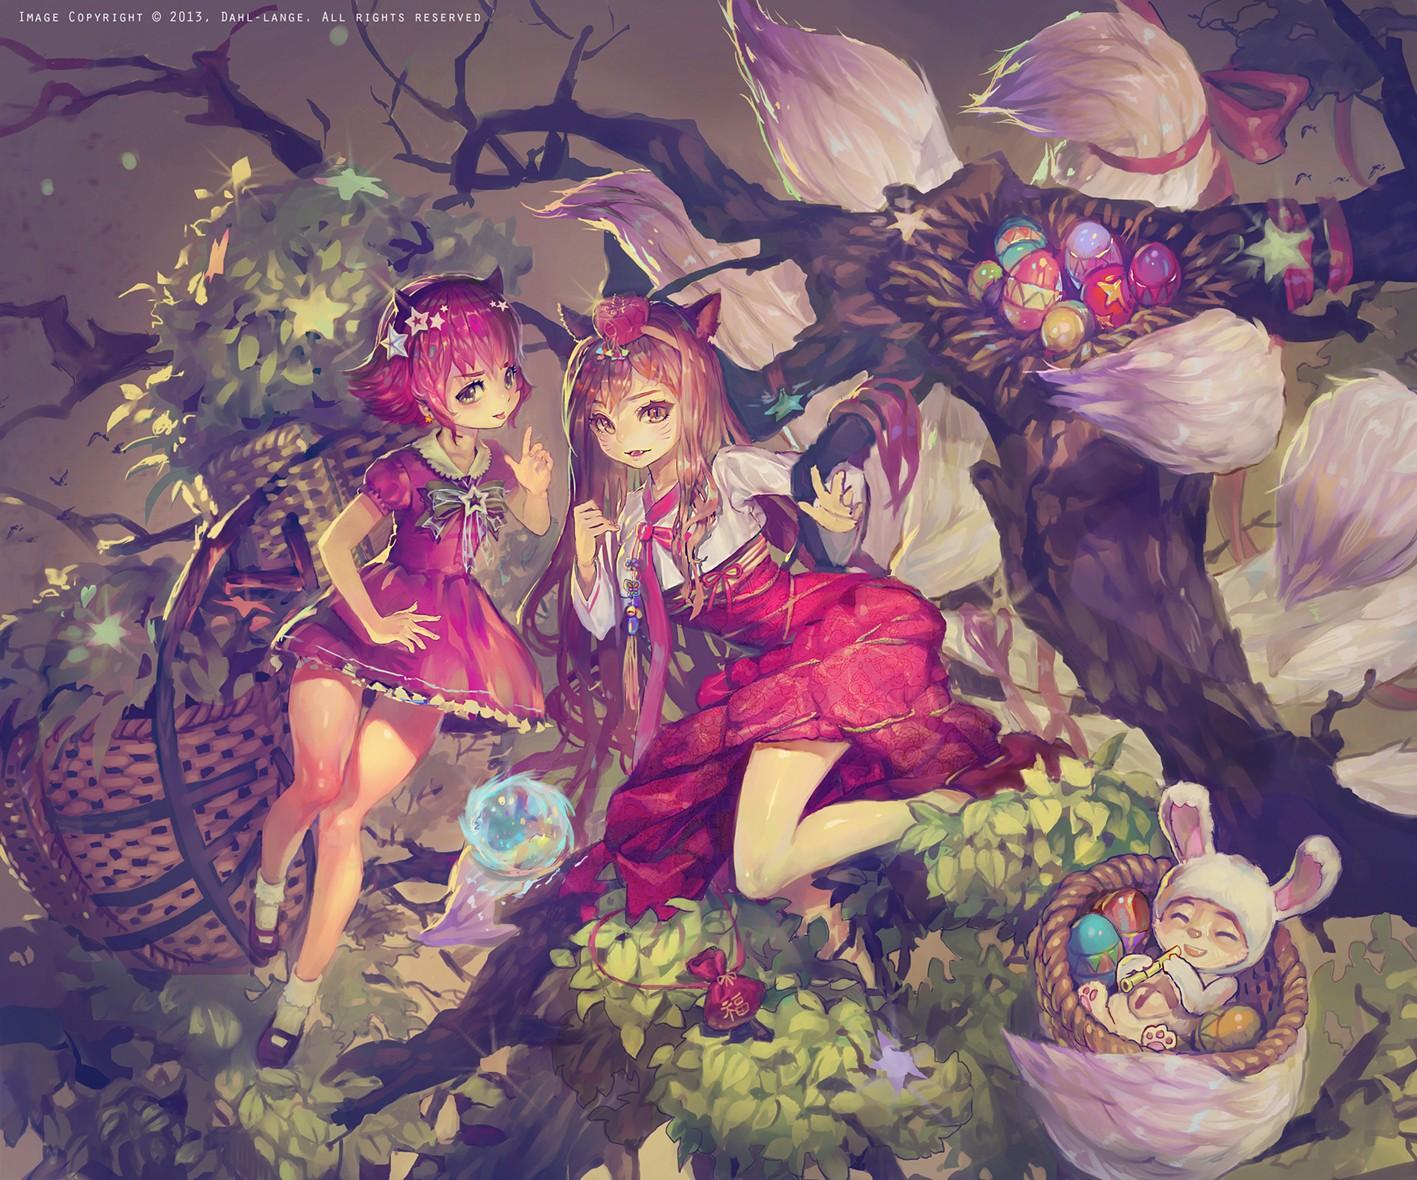 Anime Easter Bunny Girl In Basket. Spring Rainbow Flowers and Easter Eggs -  Bunny - Sticker | TeePublic